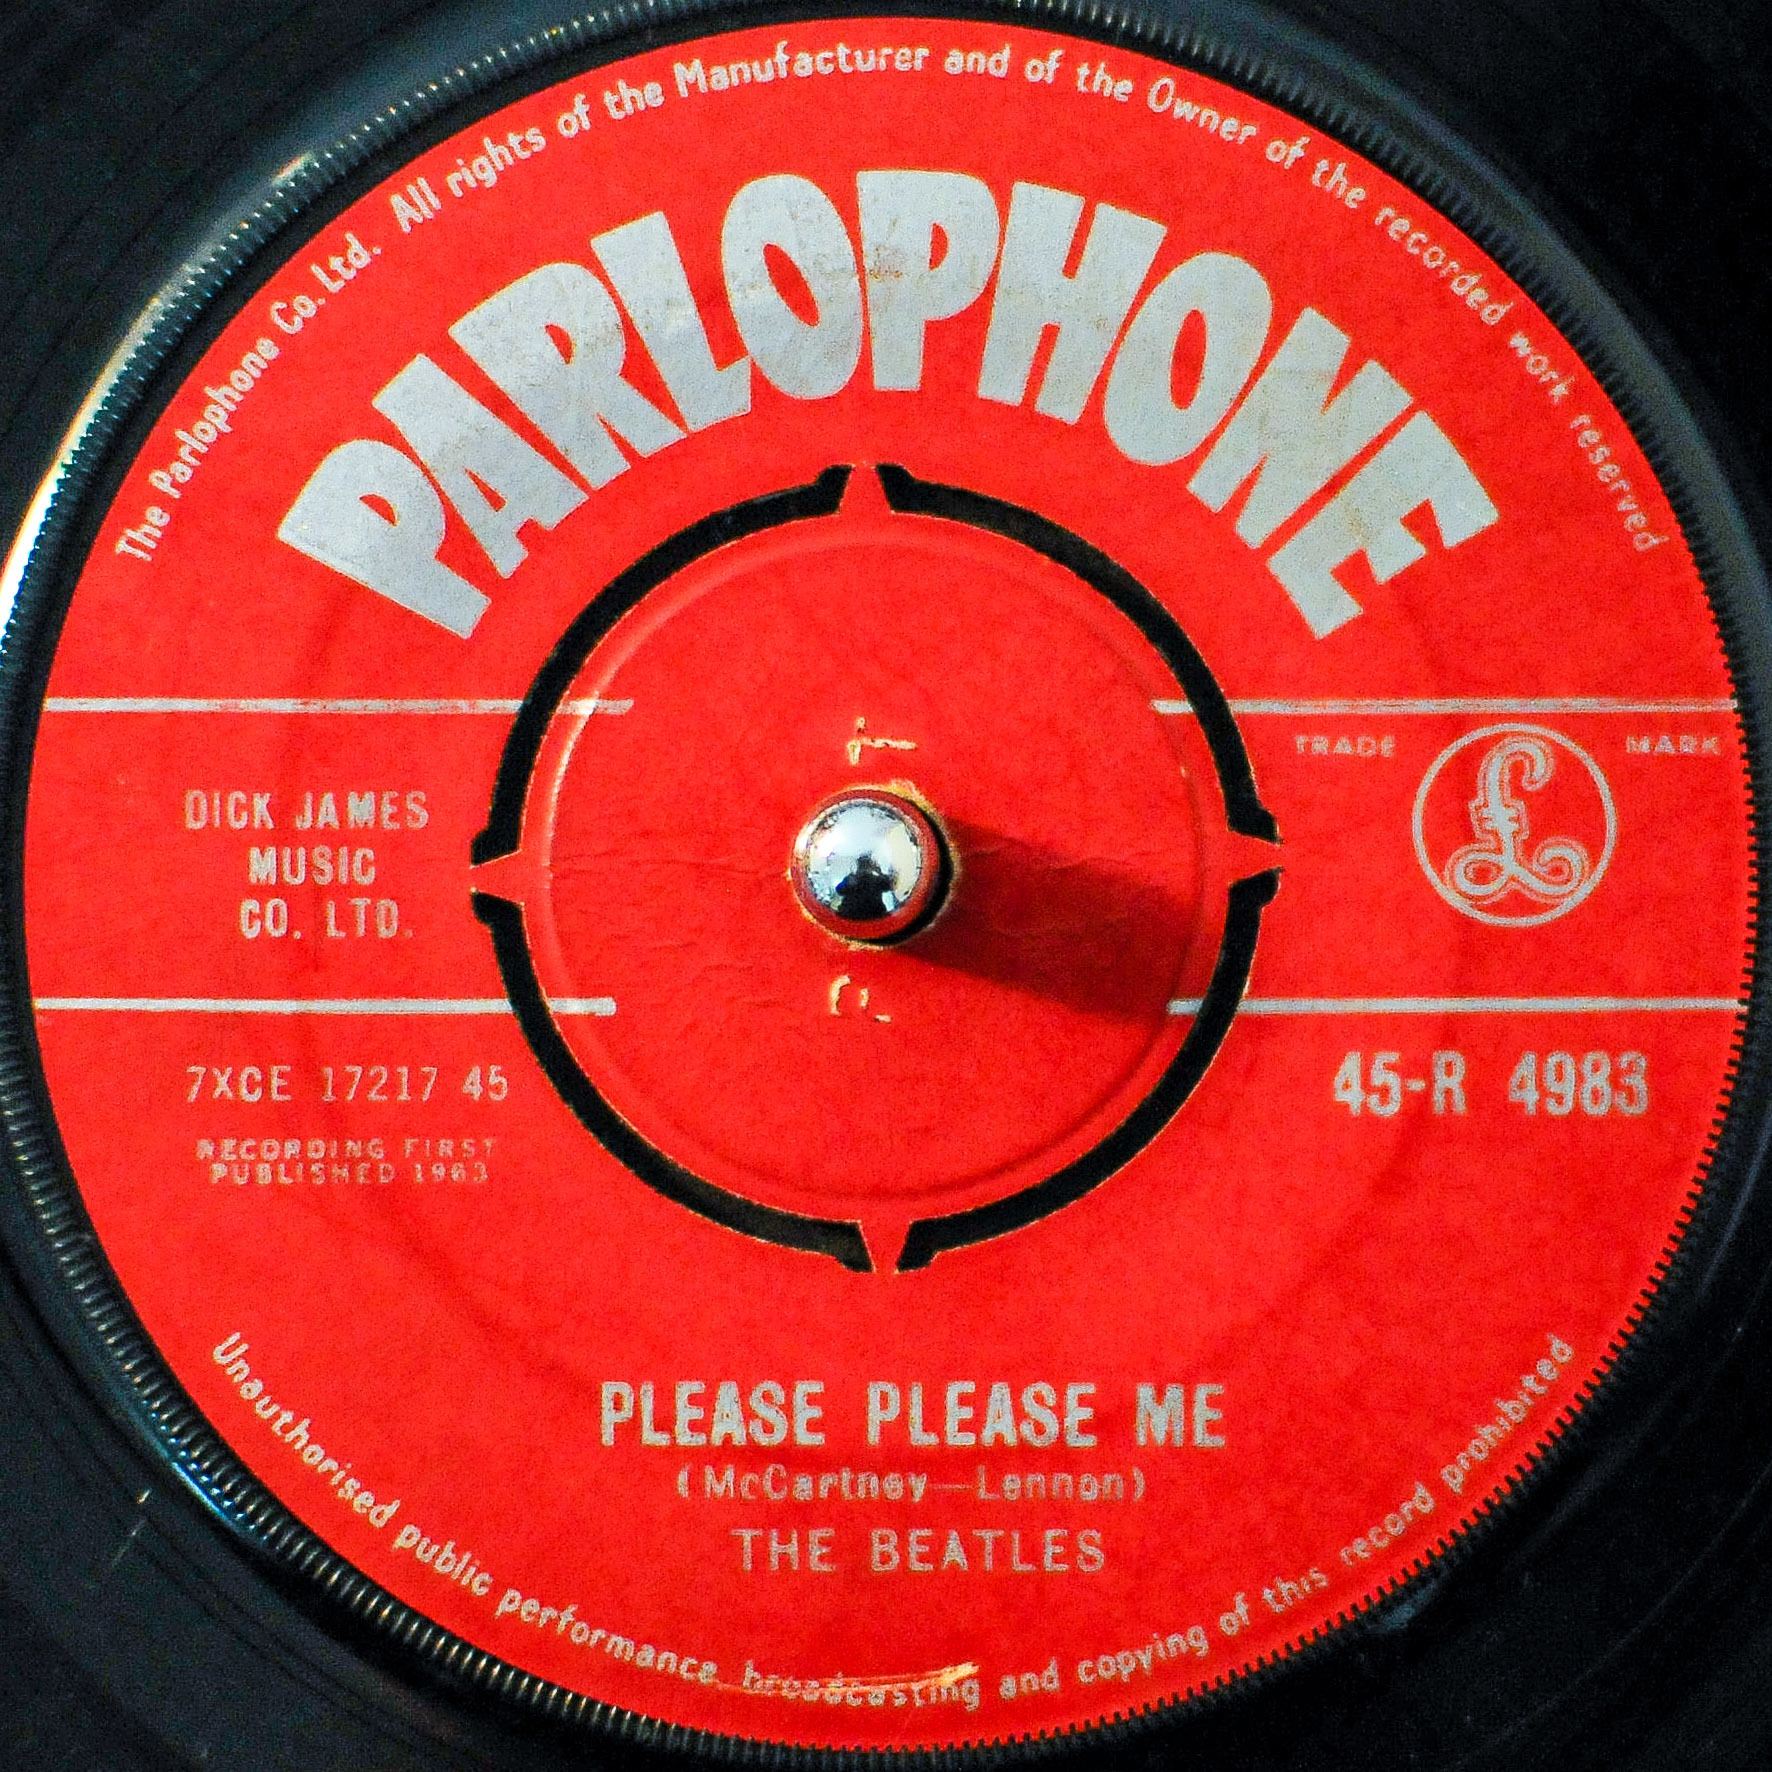 The Beatles - Please Please Me UK Single - The Beatles